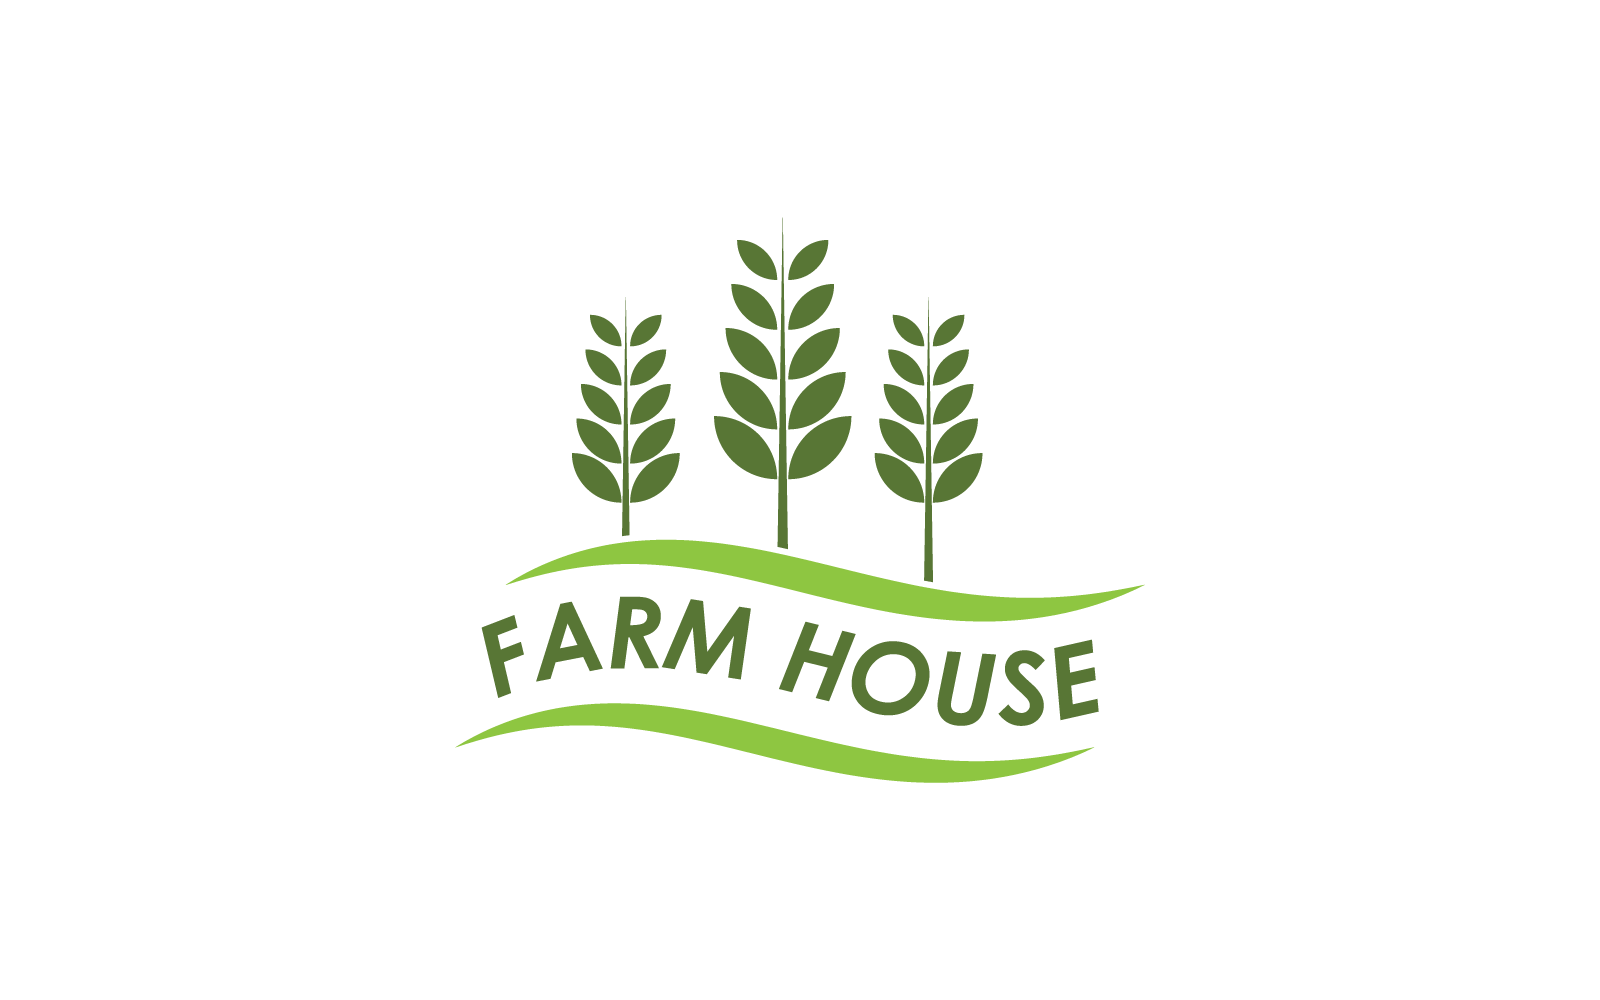 Farm house logo design template